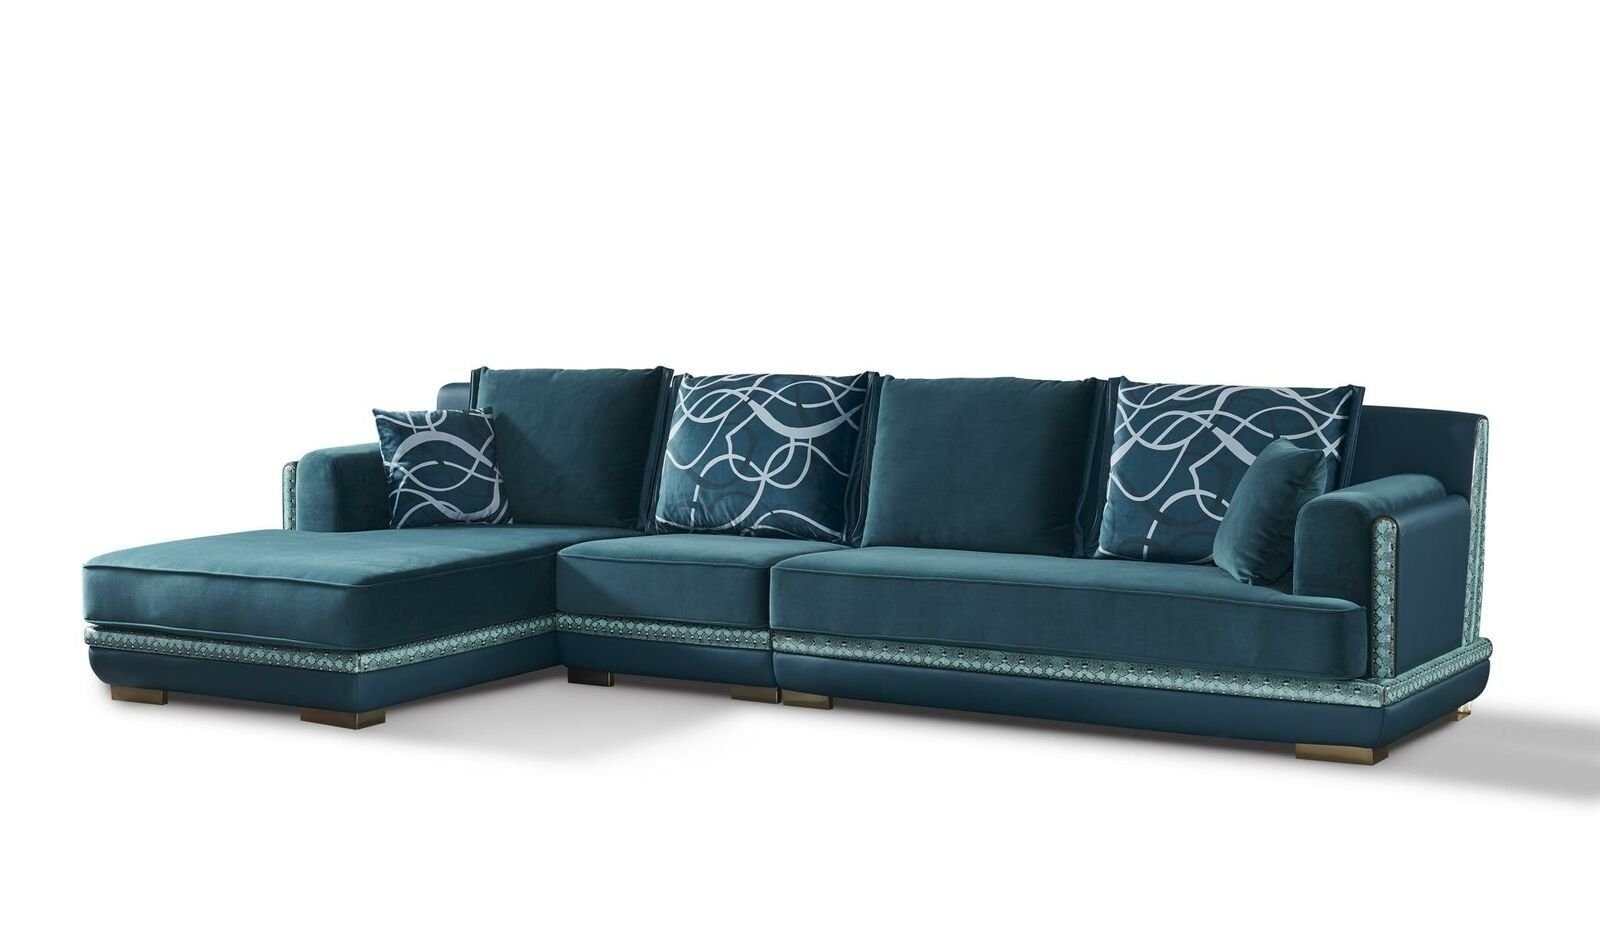 JVmoebel Ecksofa Wohnlandschaft L Form Ecksofa Couch Design Polster Textil Garnitur, Made in Europe